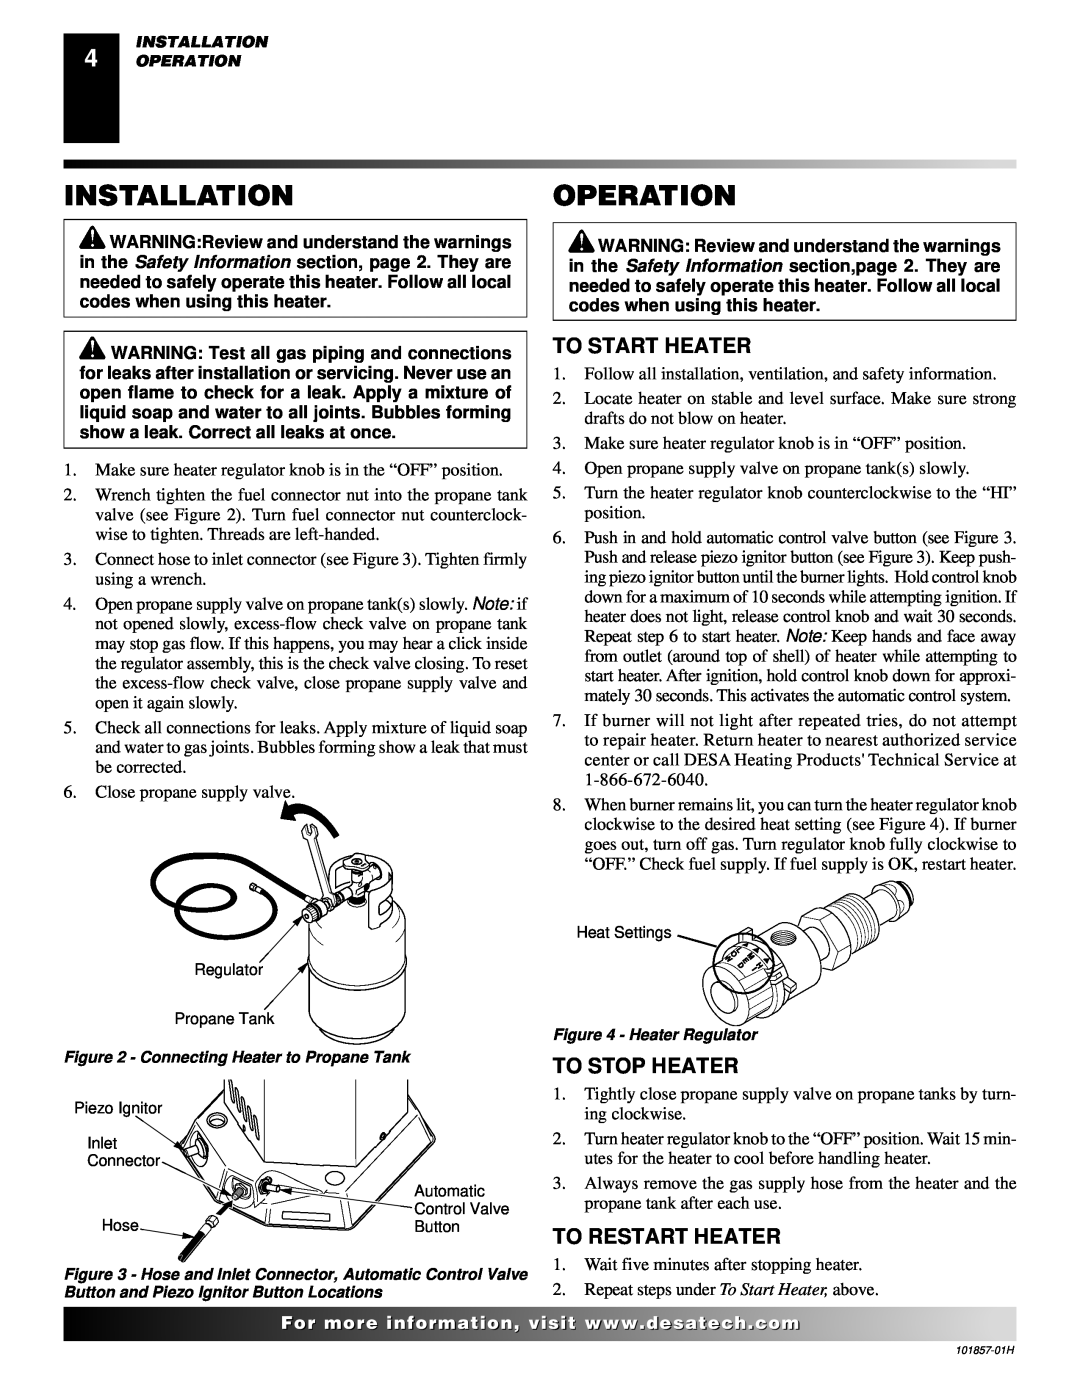 Desa TC25 owner manual Installationoperation, To Start Heater, To Stop Heater, To Restart Heater 